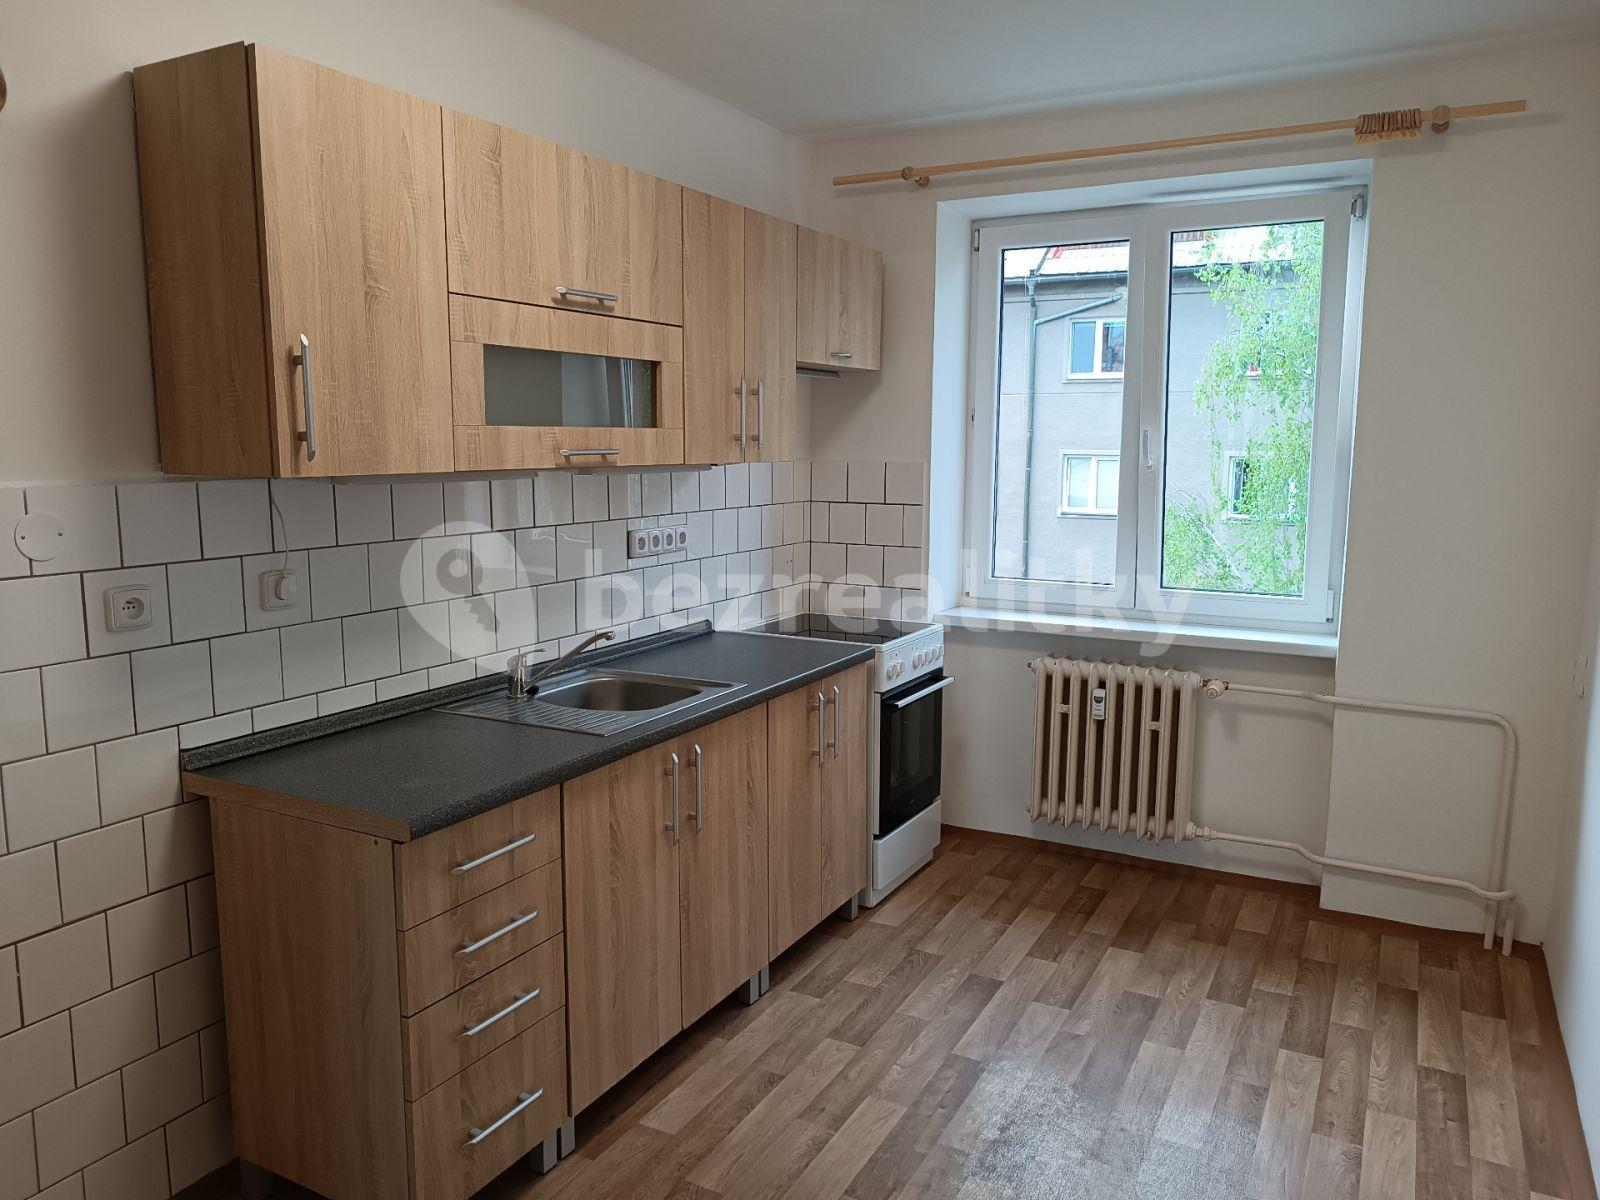 2 bedroom flat to rent, 56 m², Myslbekova, Olomouc, Olomoucký Region